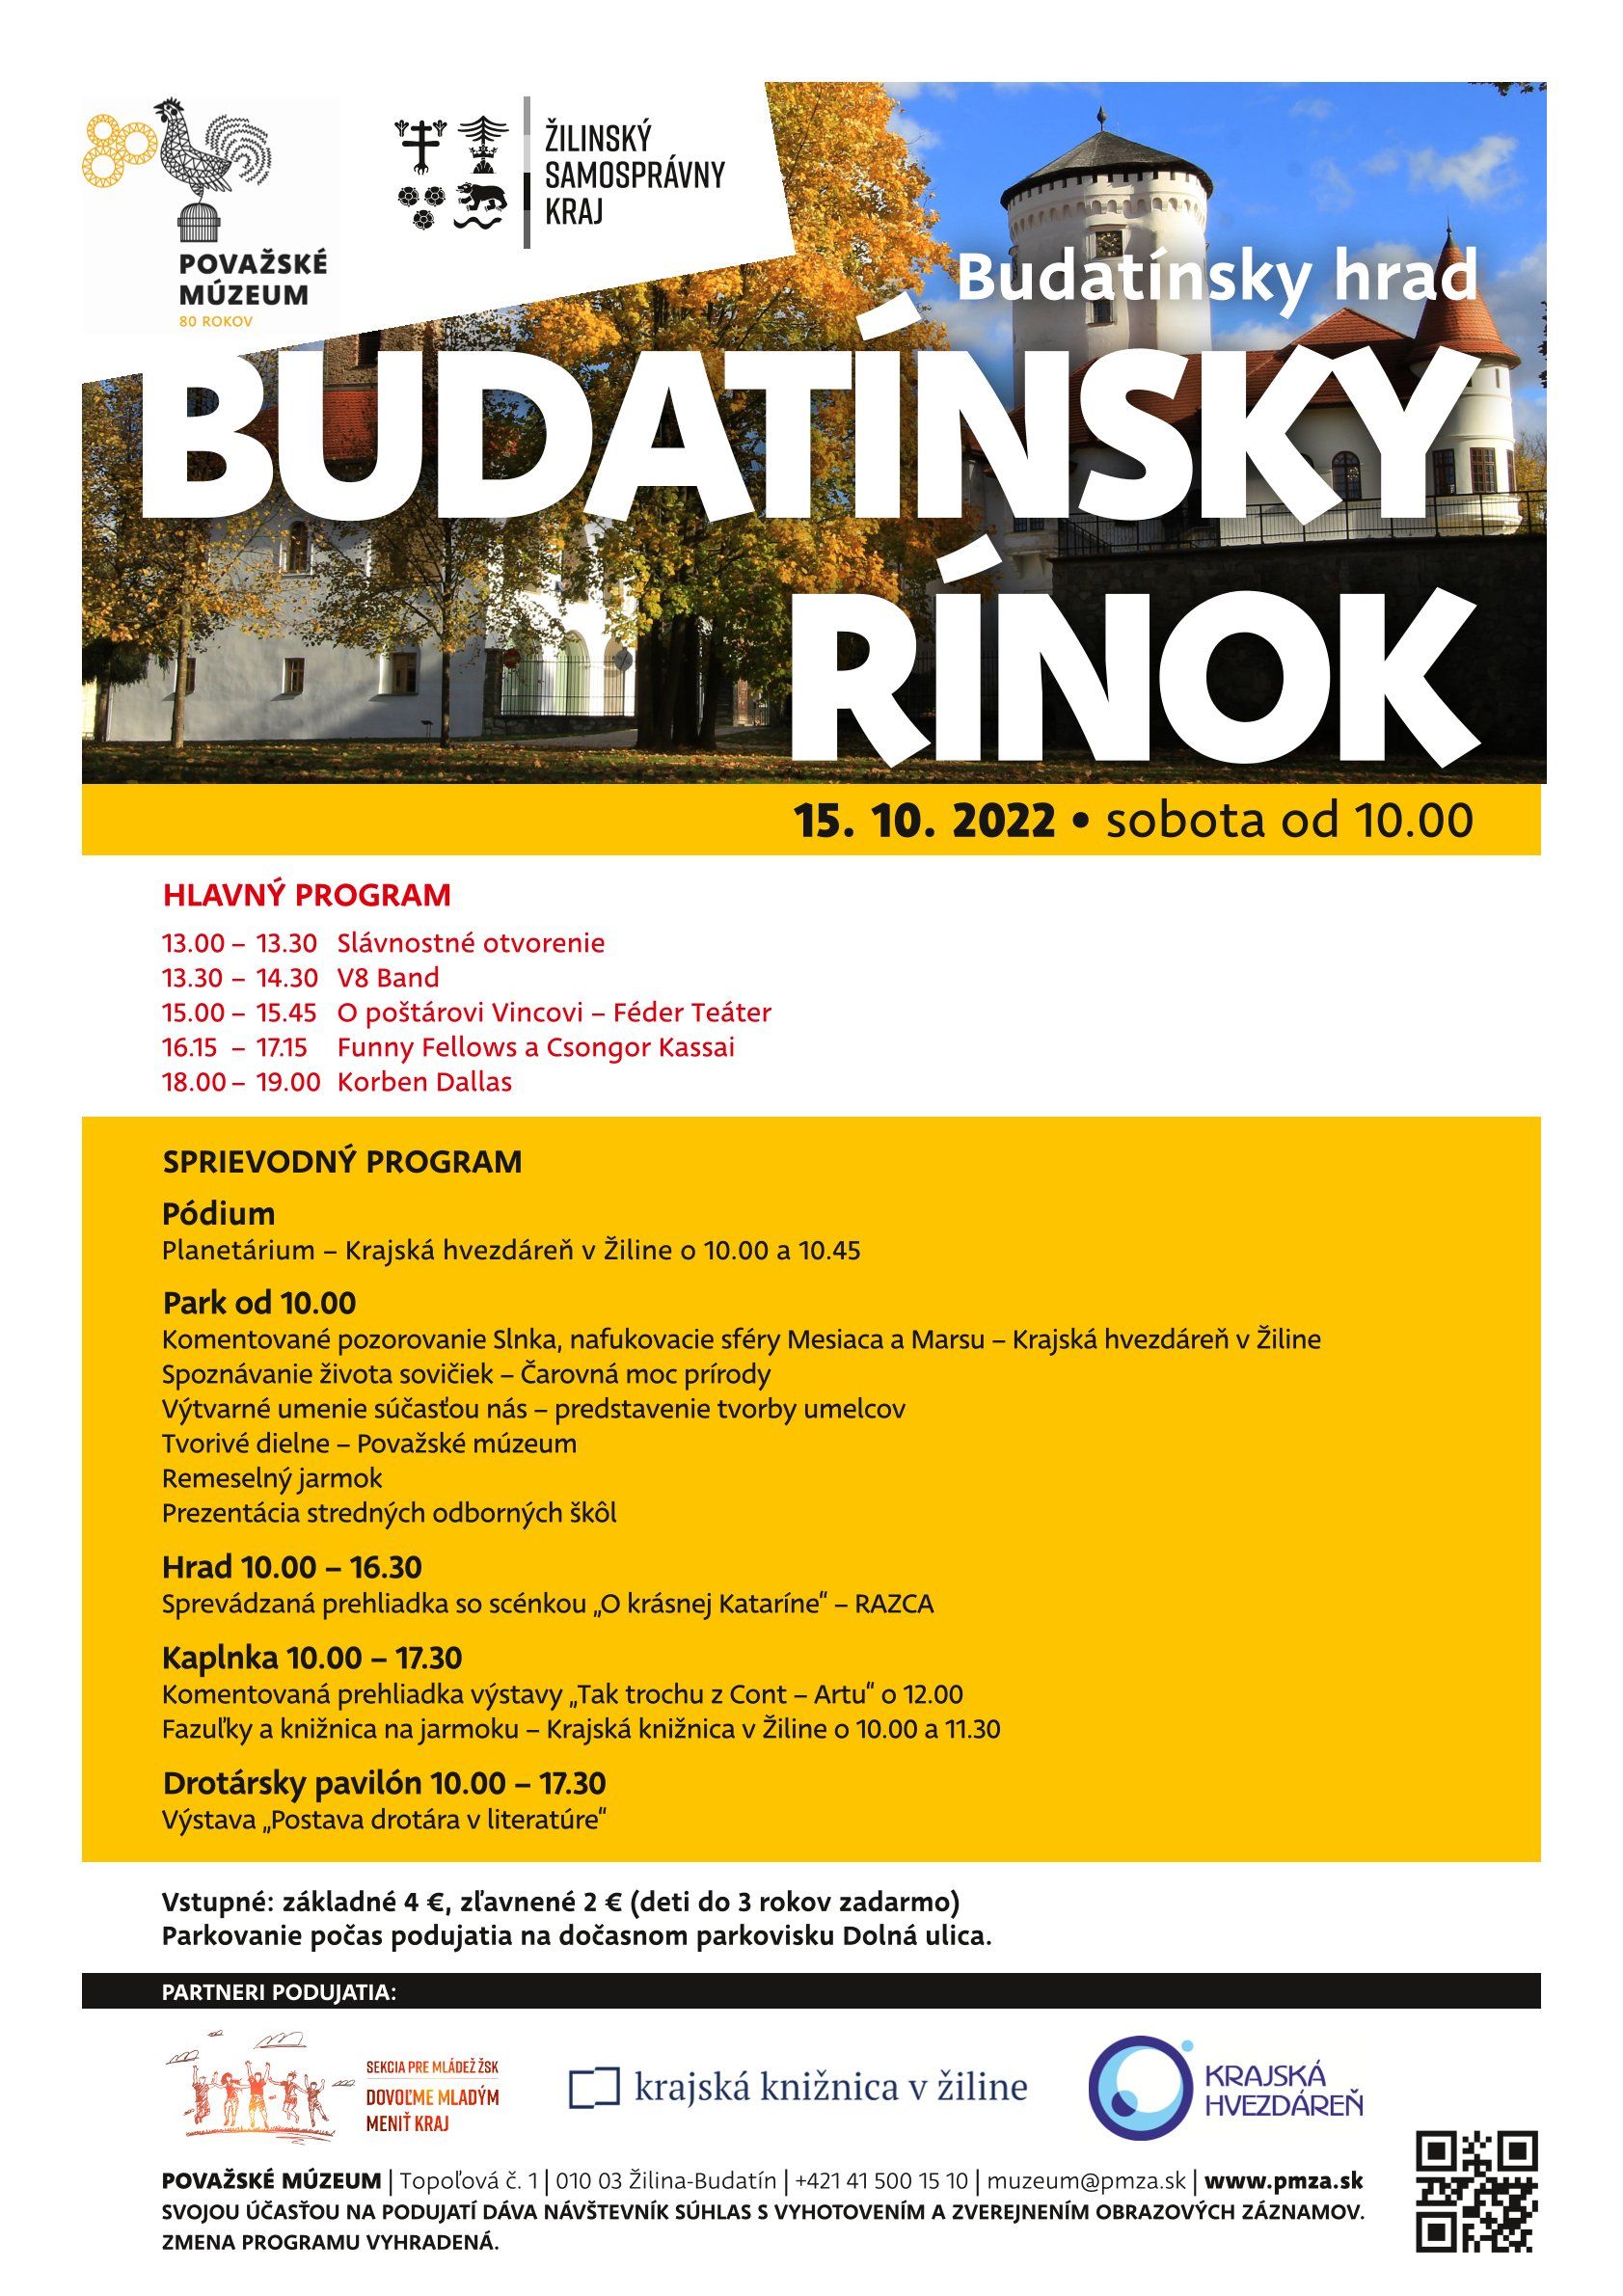 Budatinsky_rinok_K4 (002).jpg